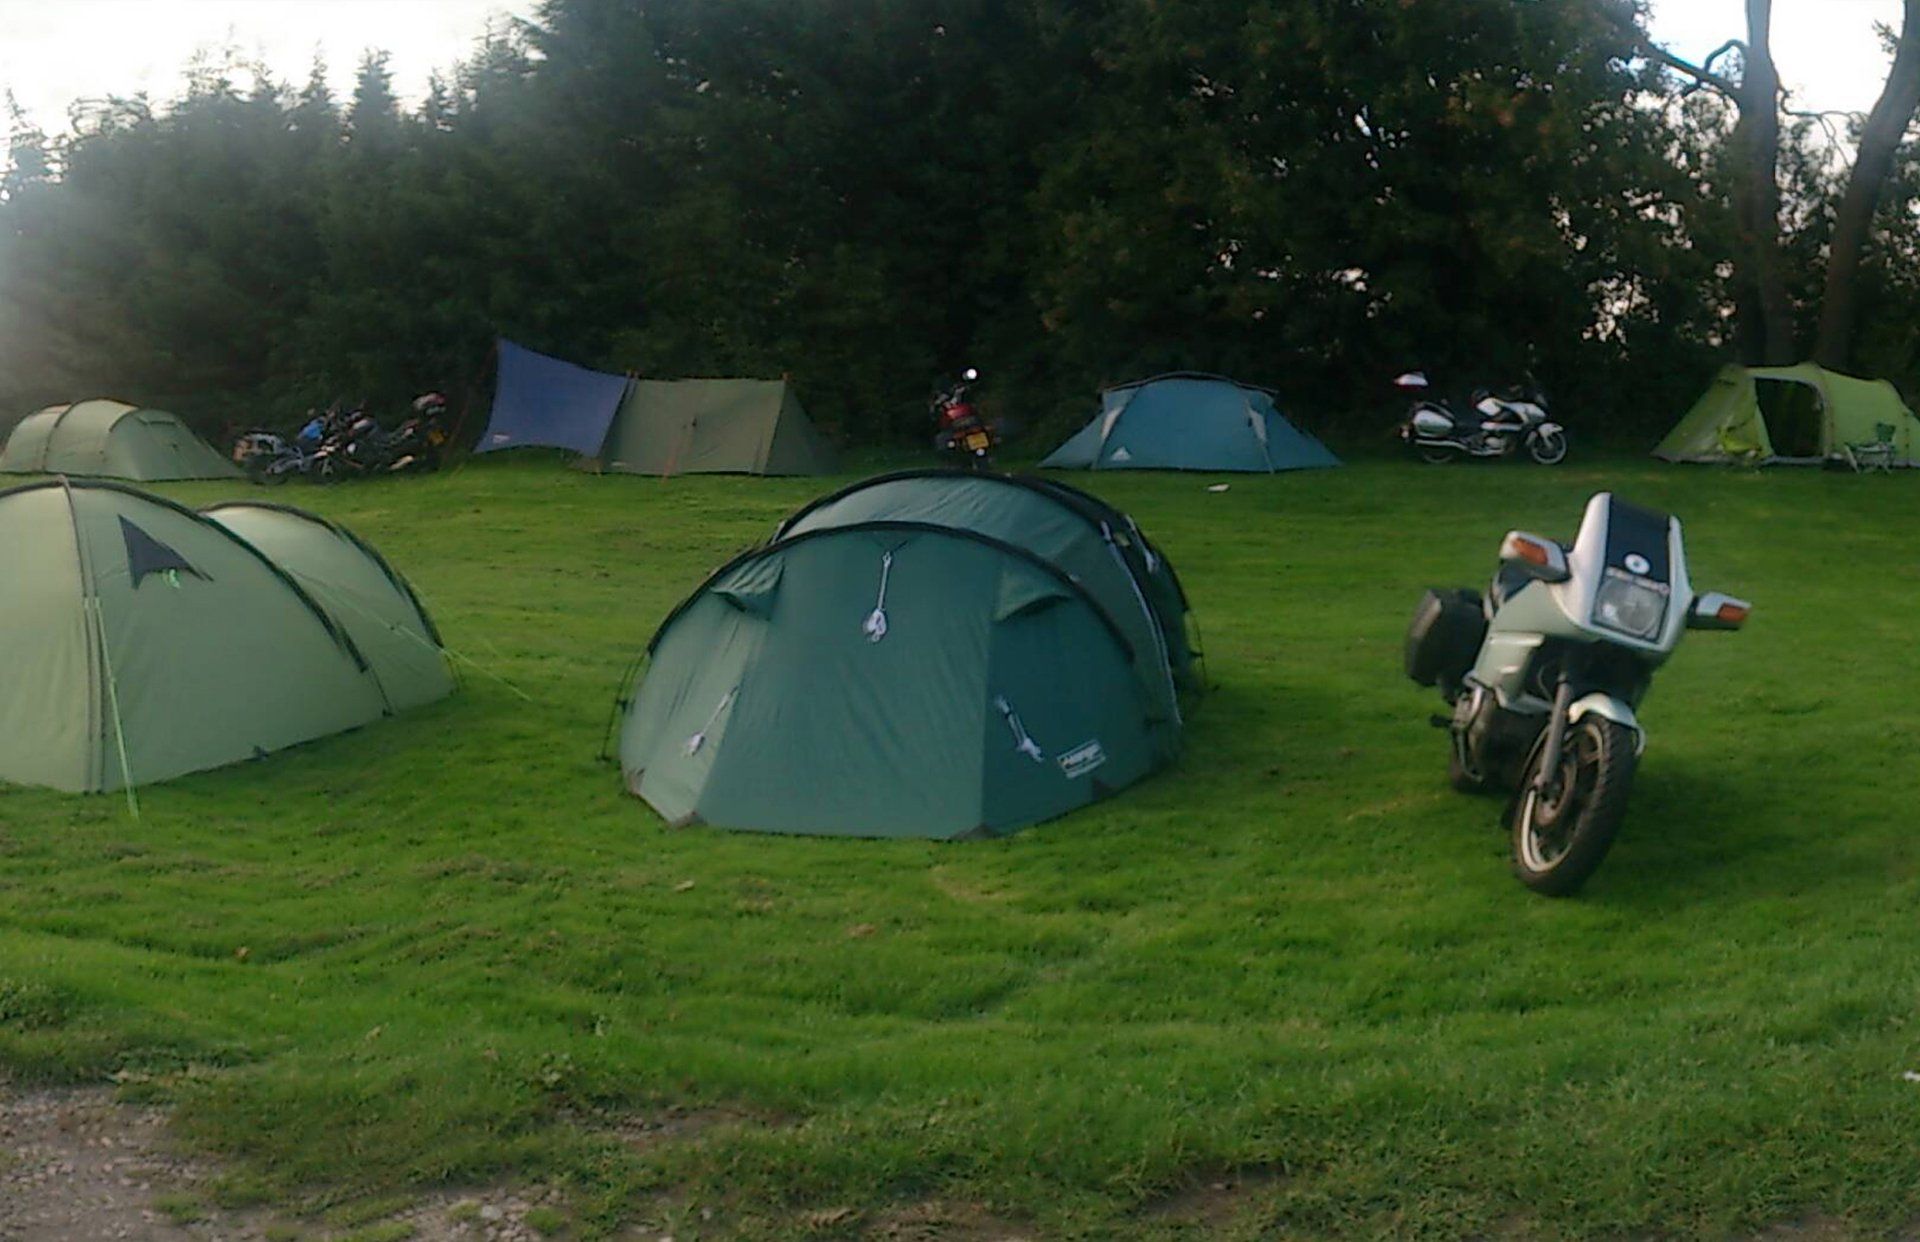 Lower Lode riverside camping and caravan site near Tewkesbury, Gloucestershire